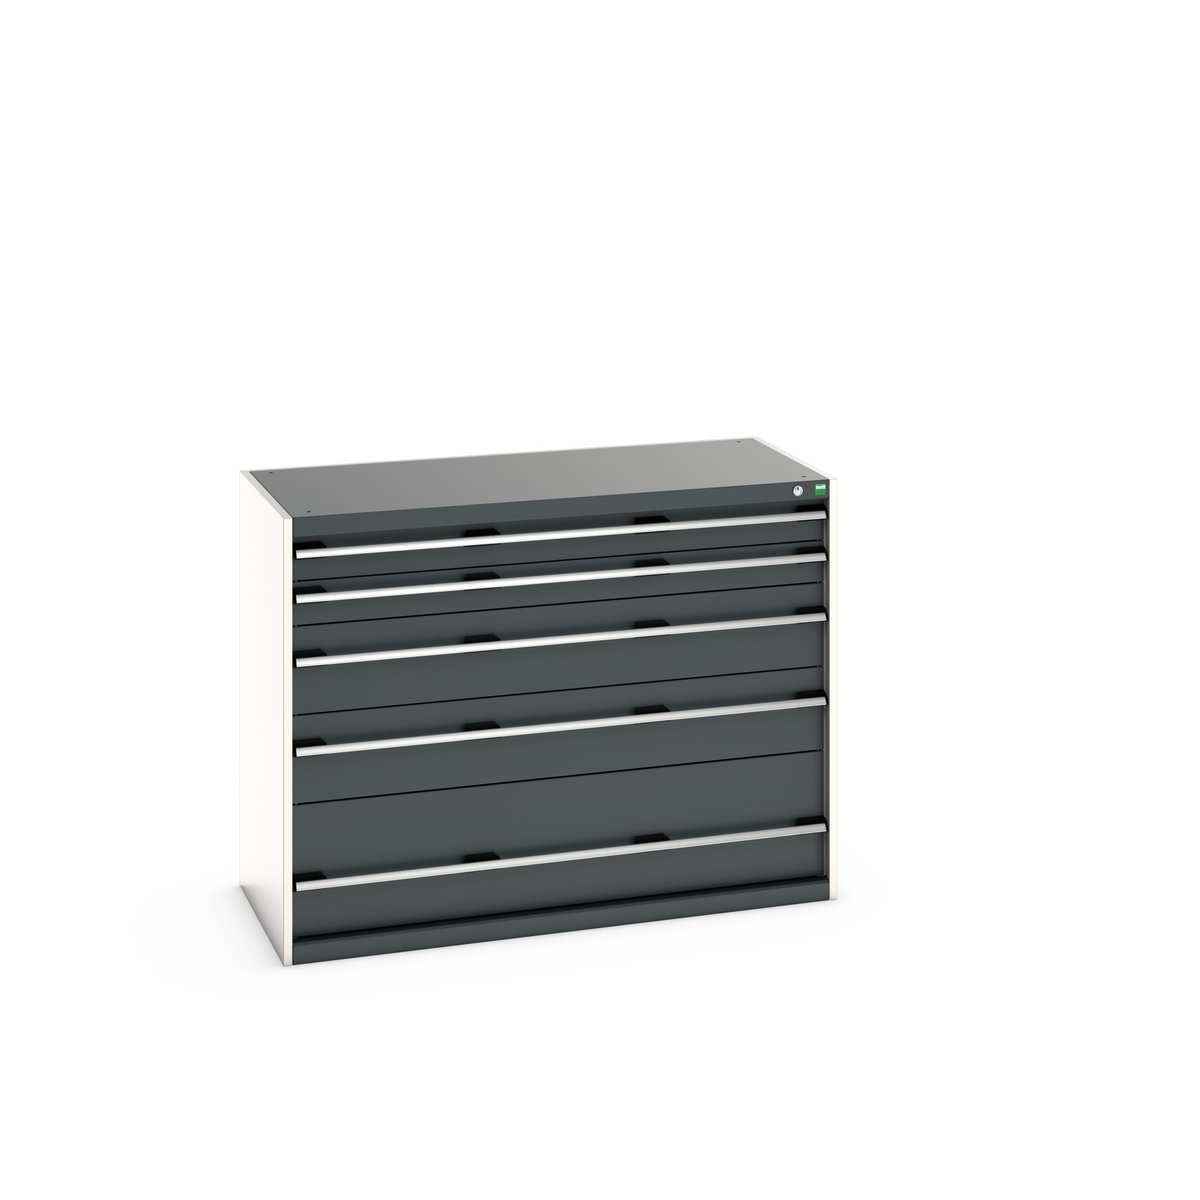 40022121. - cubio drawer cabinet